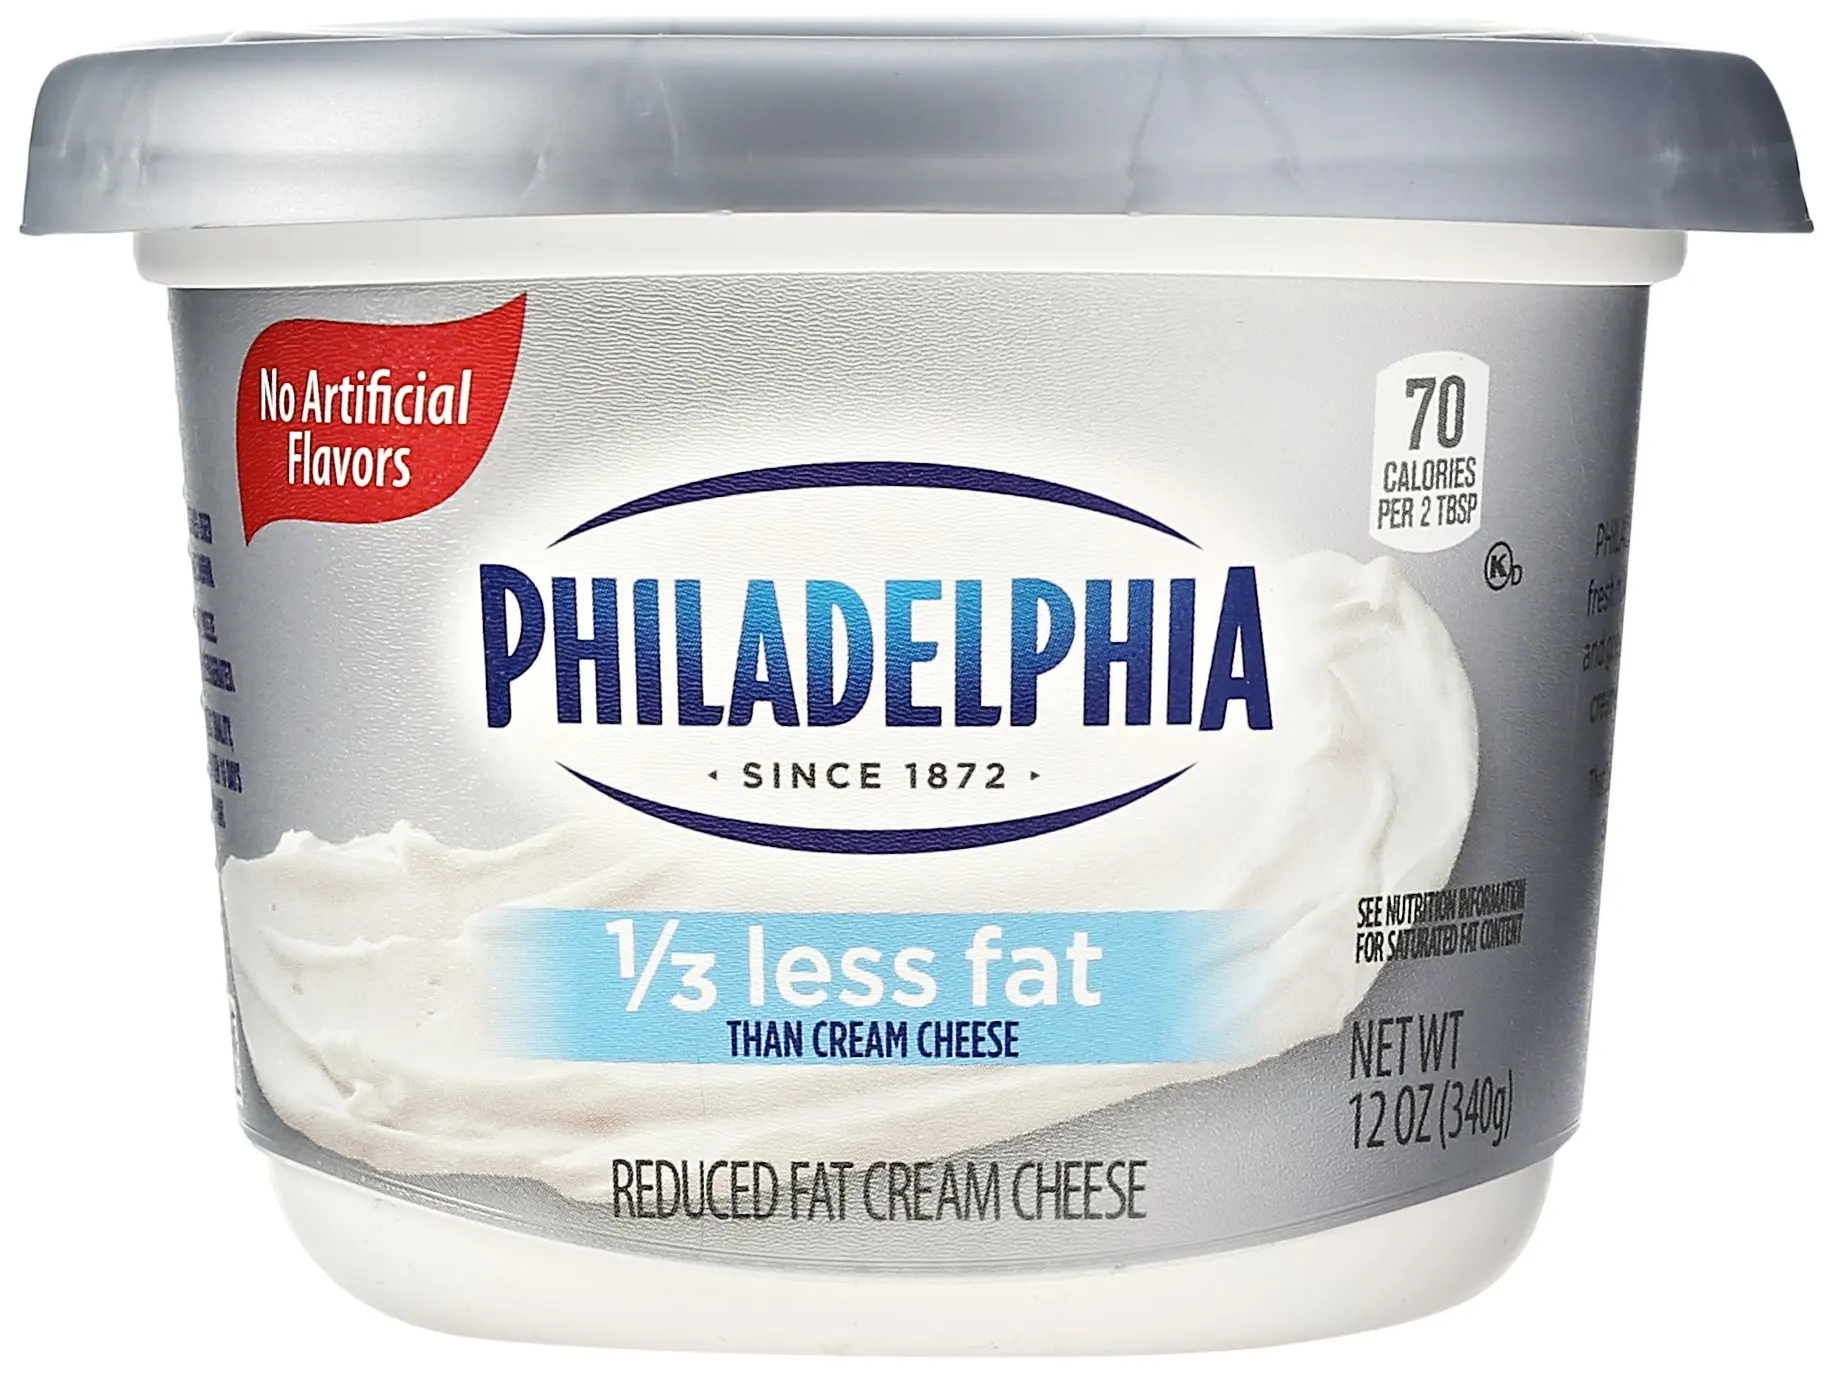 1.0. Philadelphia, Cream Cheese, 1/3 Less Fat, 12 oz. 